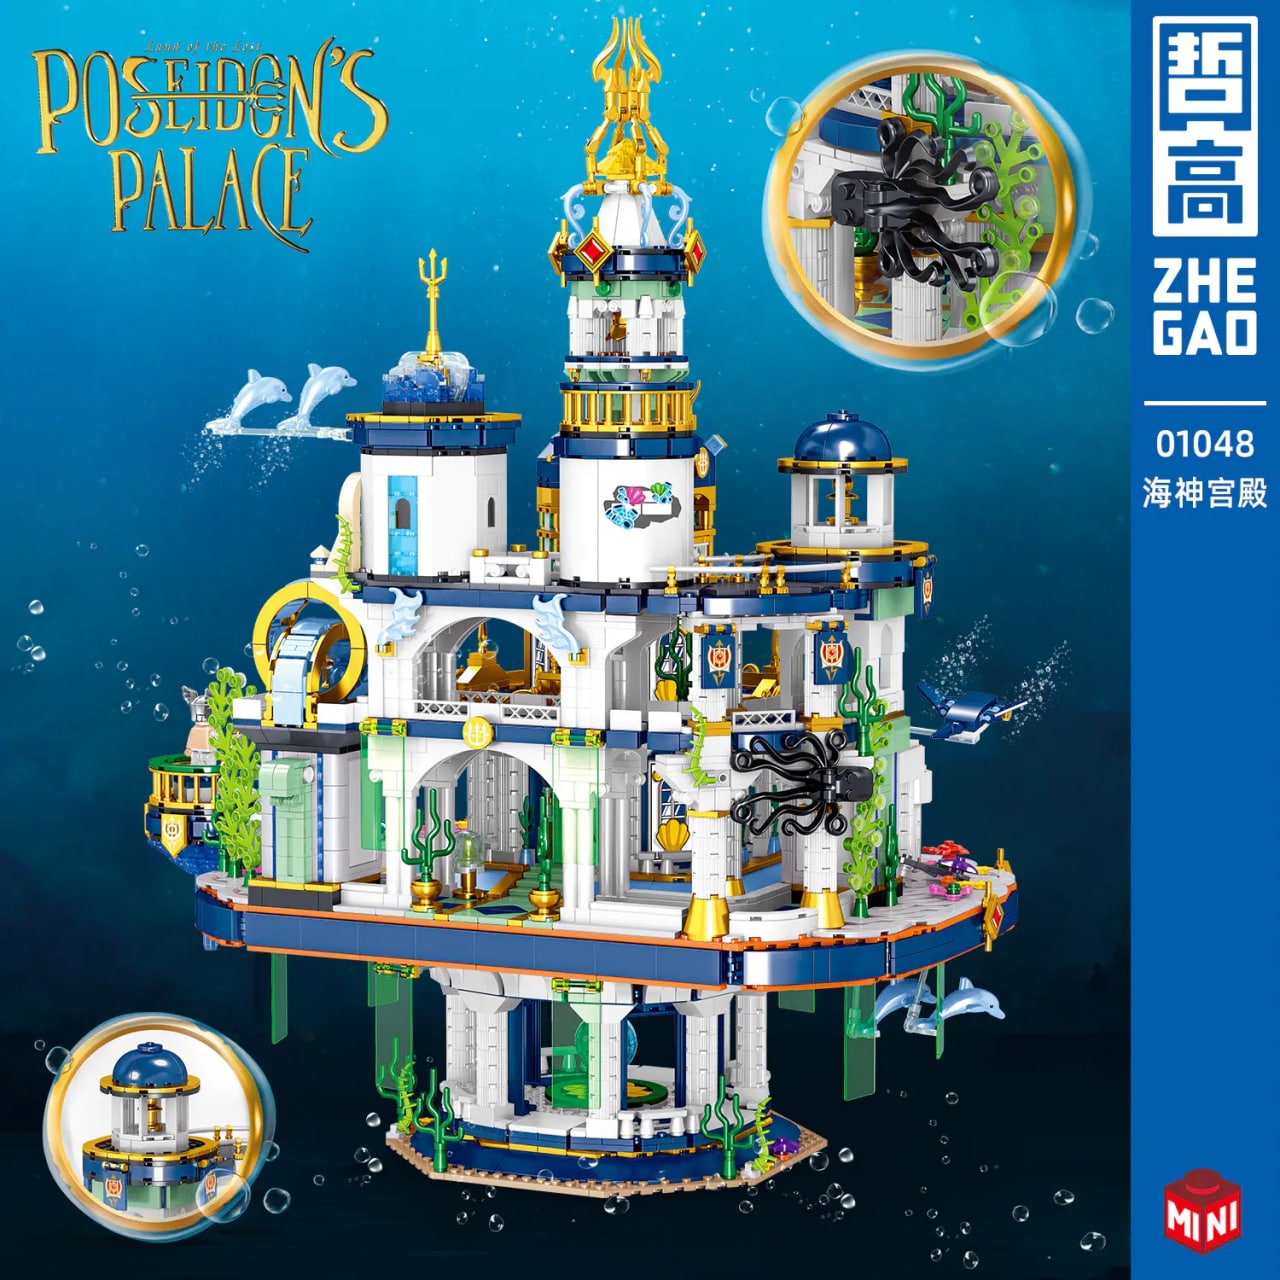 Poseidon Palace ZHEGAO 01048 Modular Building With 4133 Pieces